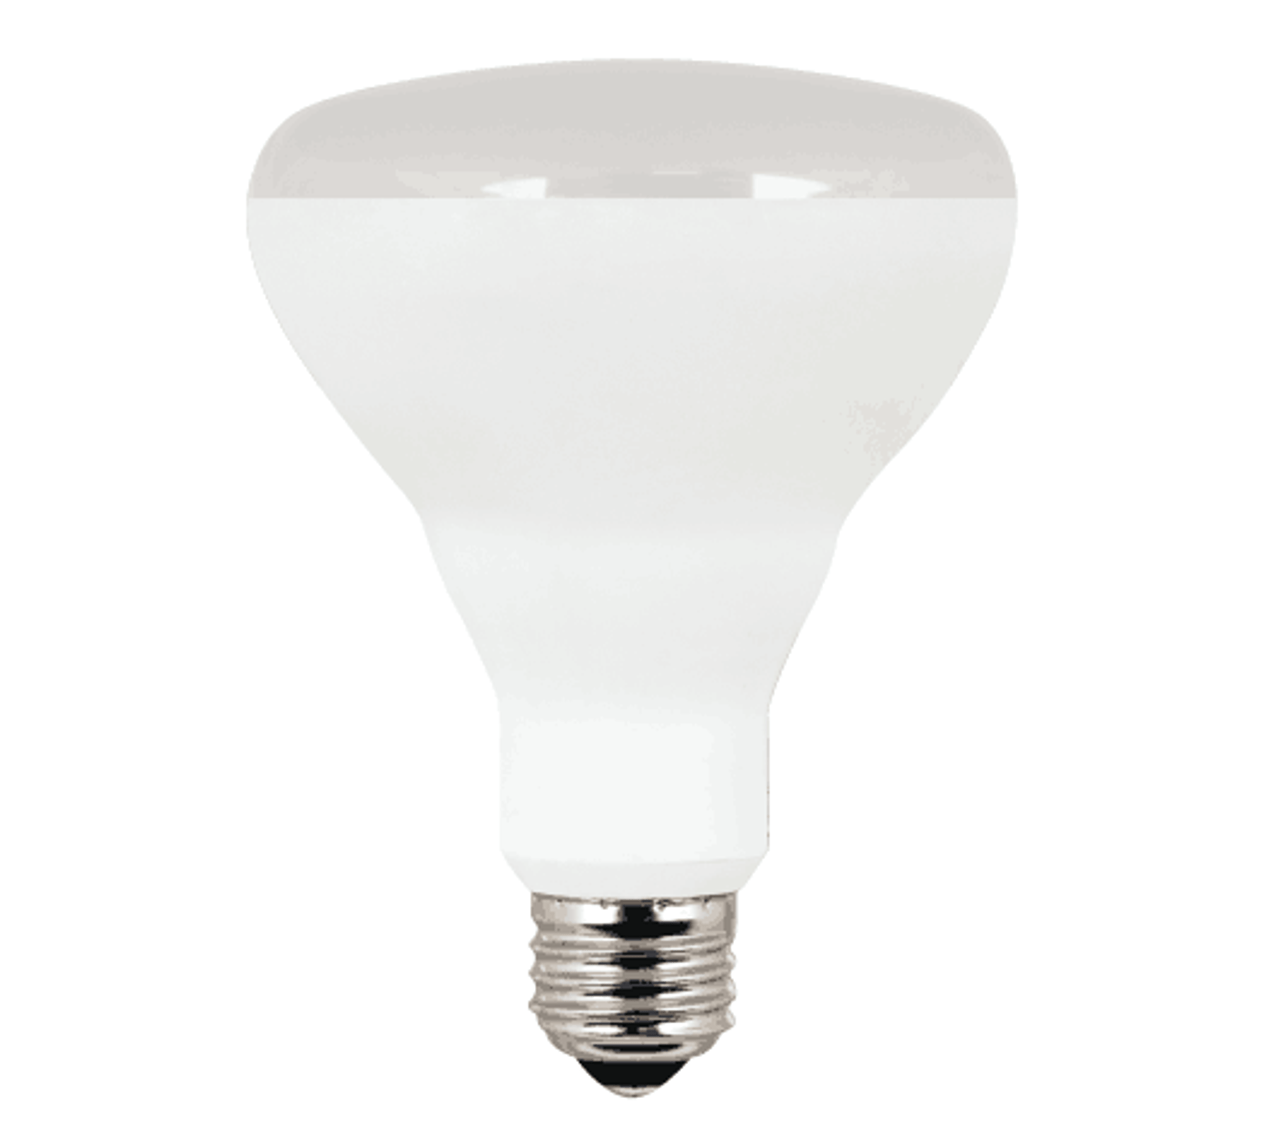 Basics 65W Equivalent 10,000 Hour Lifetime BR30 LED Light Bulb Daylight Dimmable 2-Pack 